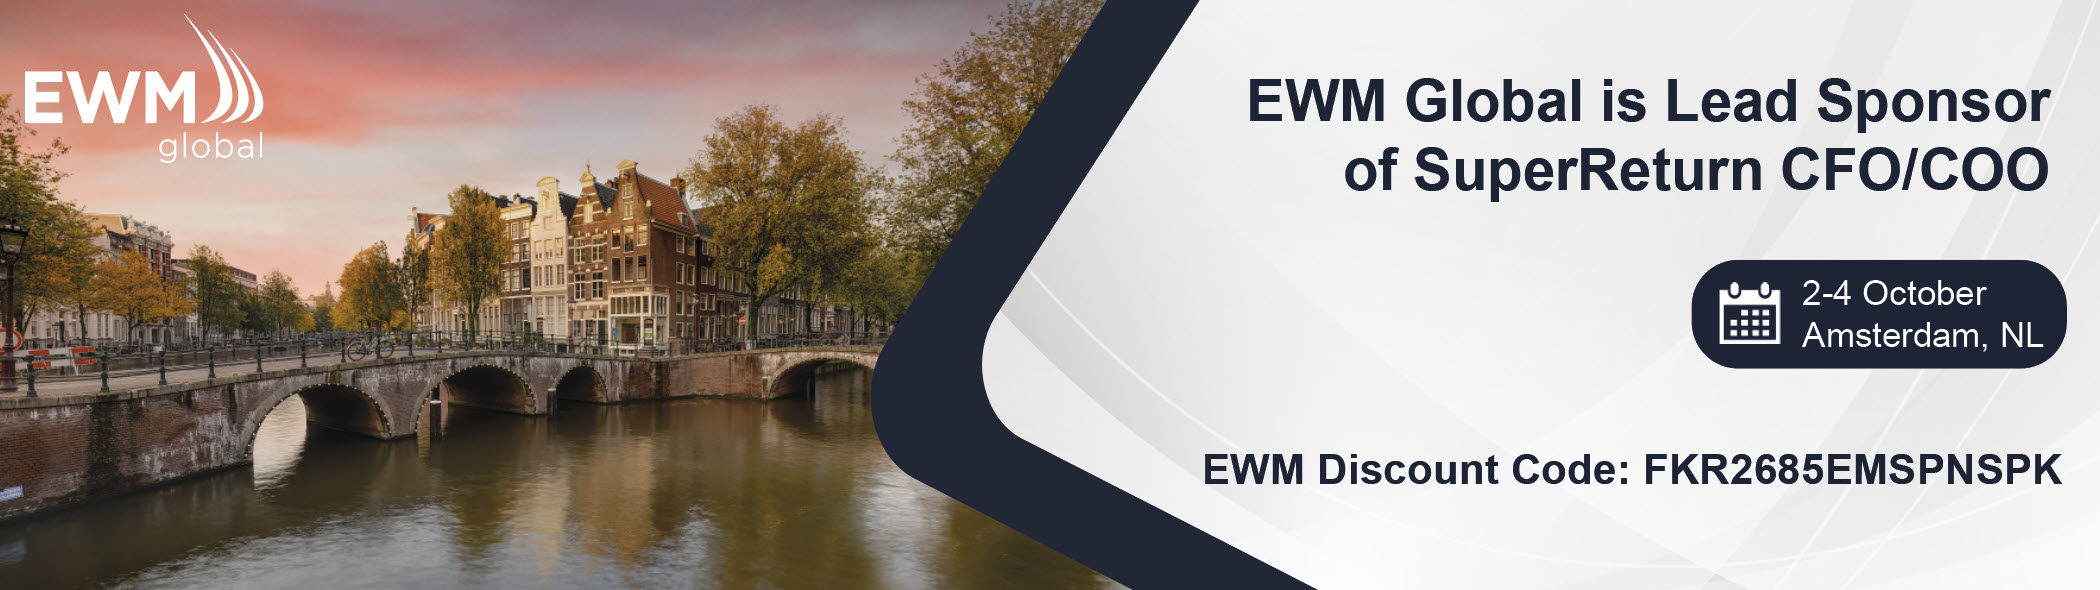 EWM Global to Sponsor SuperReturn CFO/COO Conference